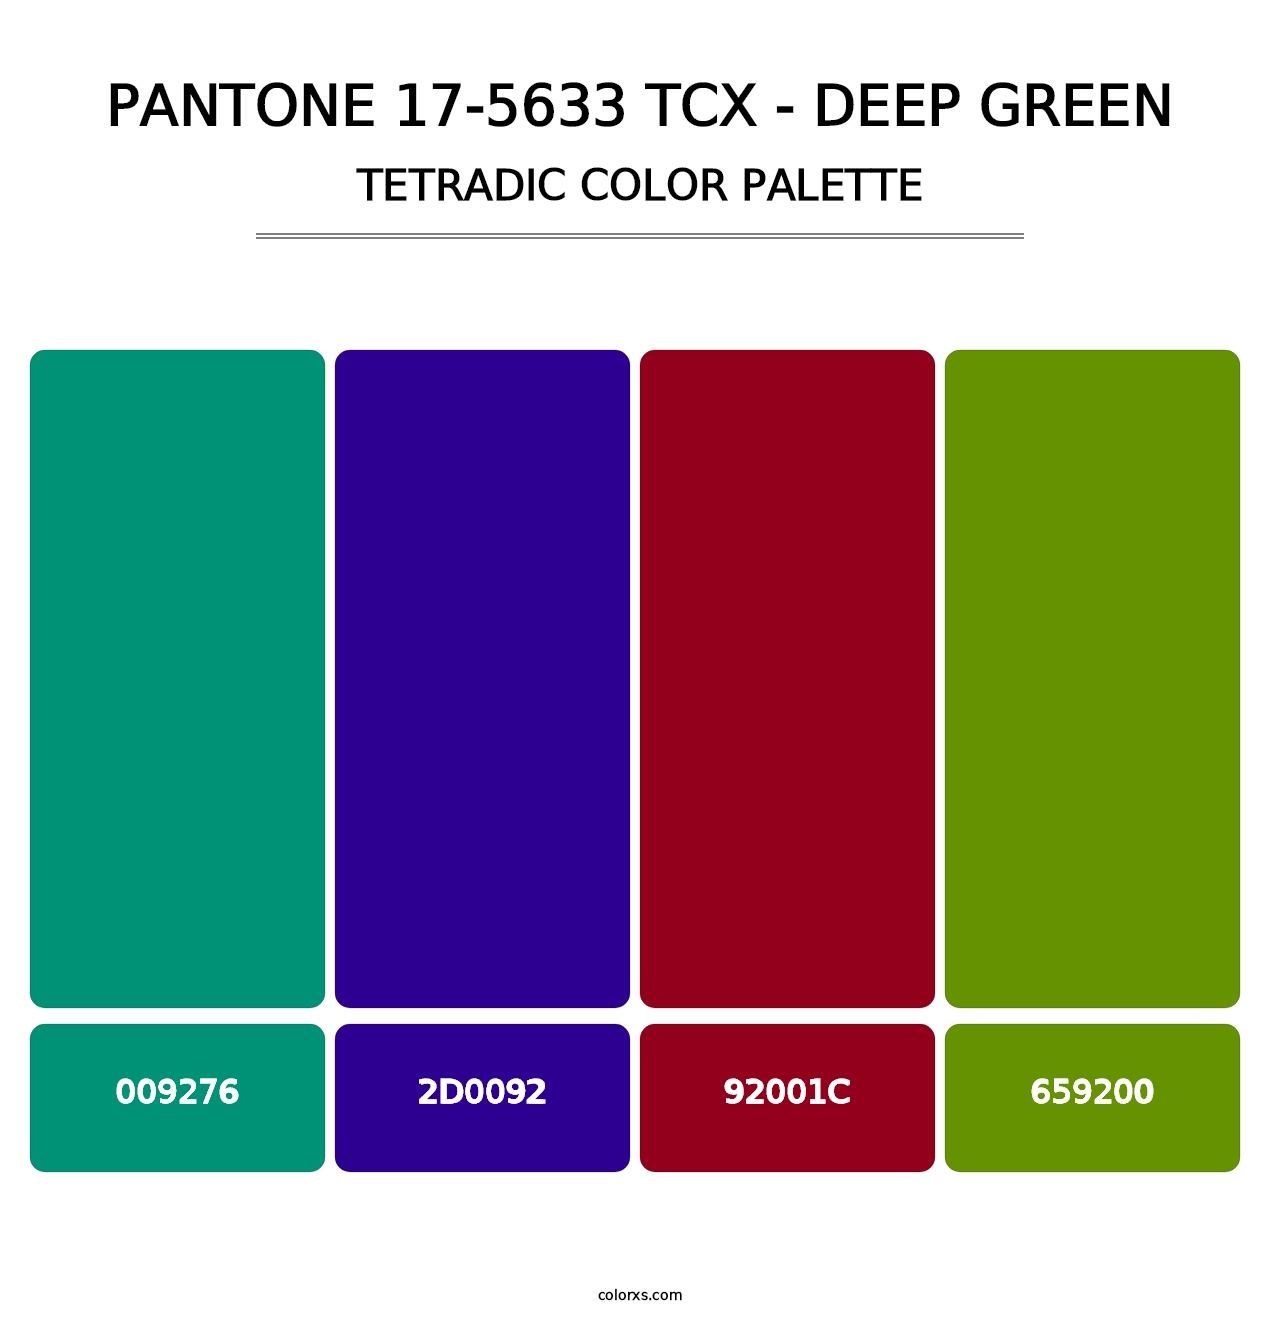 PANTONE 17-5633 TCX - Deep Green - Tetradic Color Palette